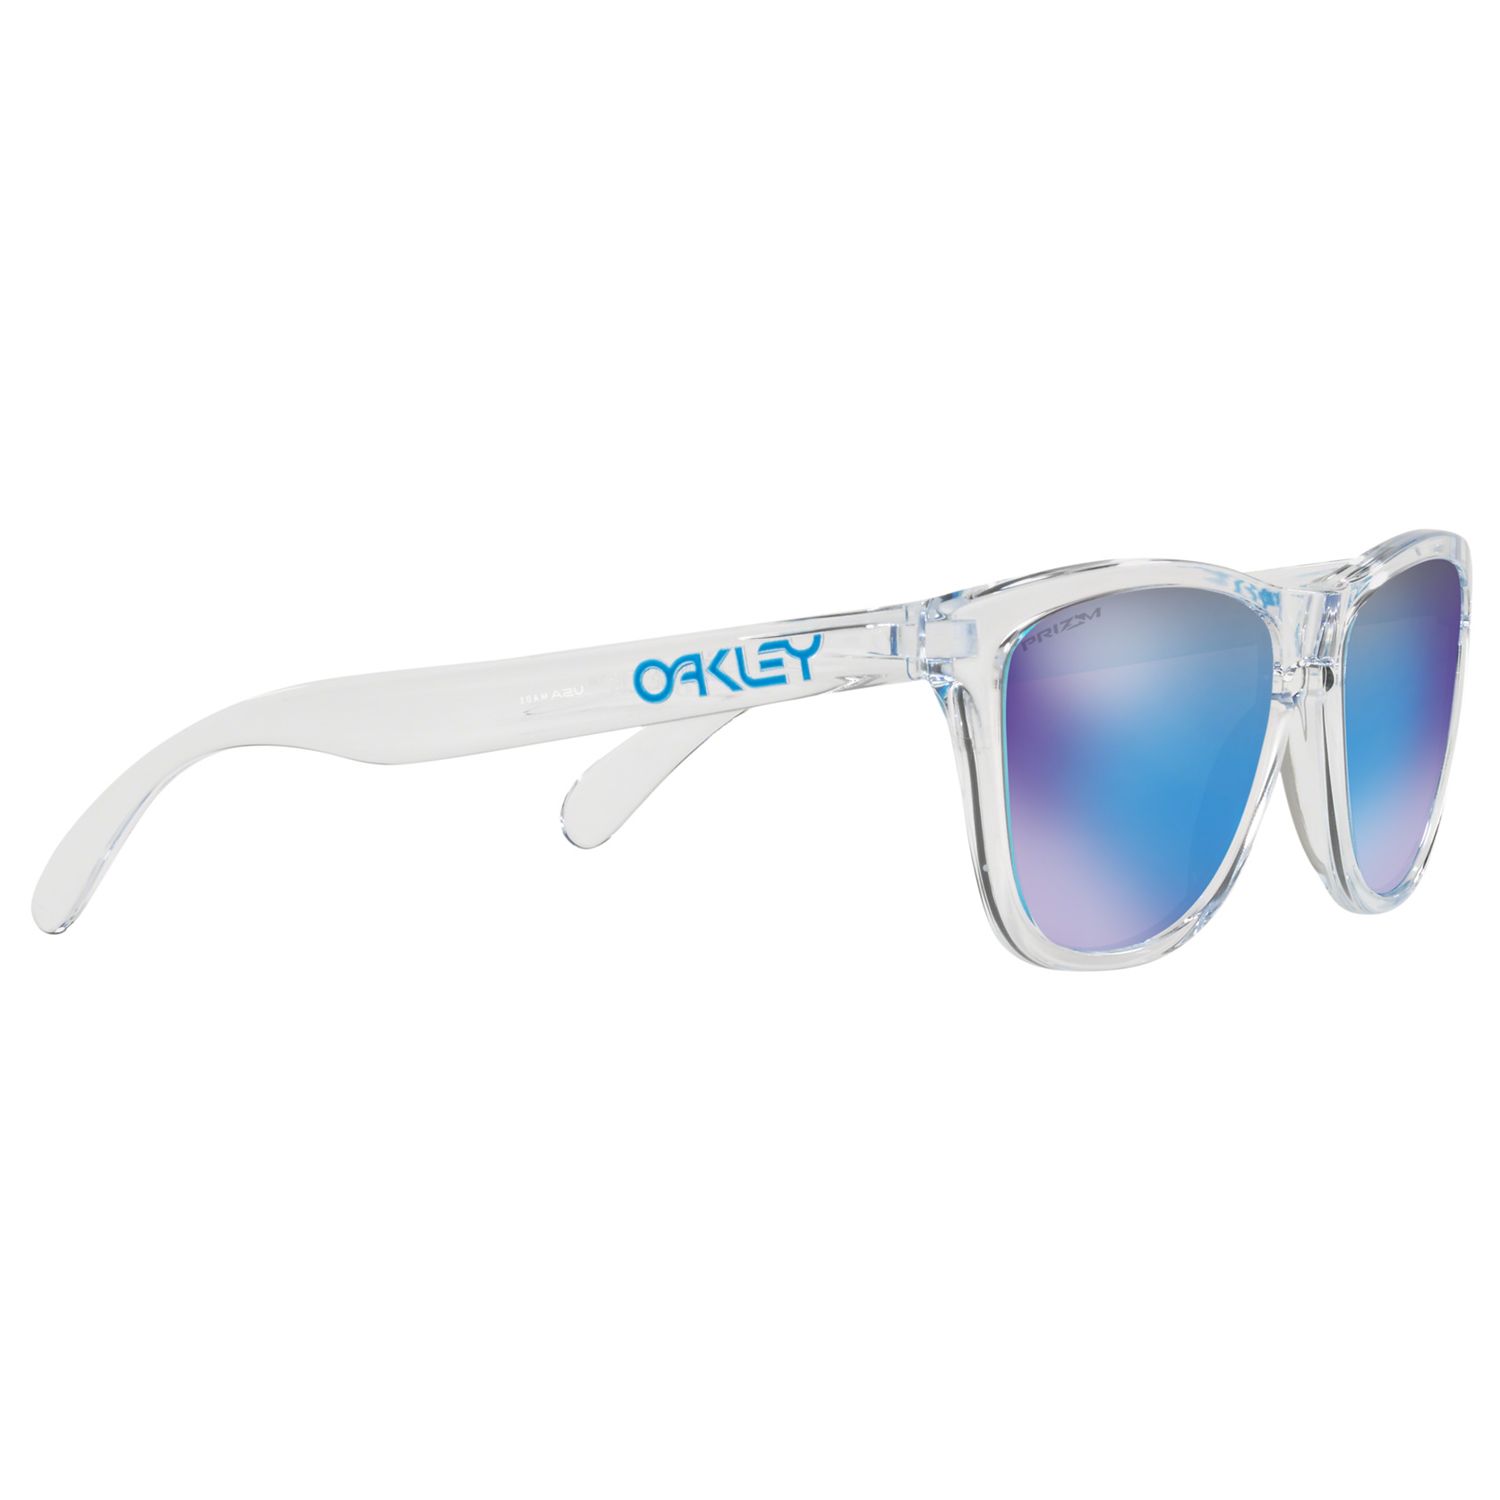 Buy Oakley OO9013 Men's Frogskins Prizm Square Sunglasses Online at johnlewis.com